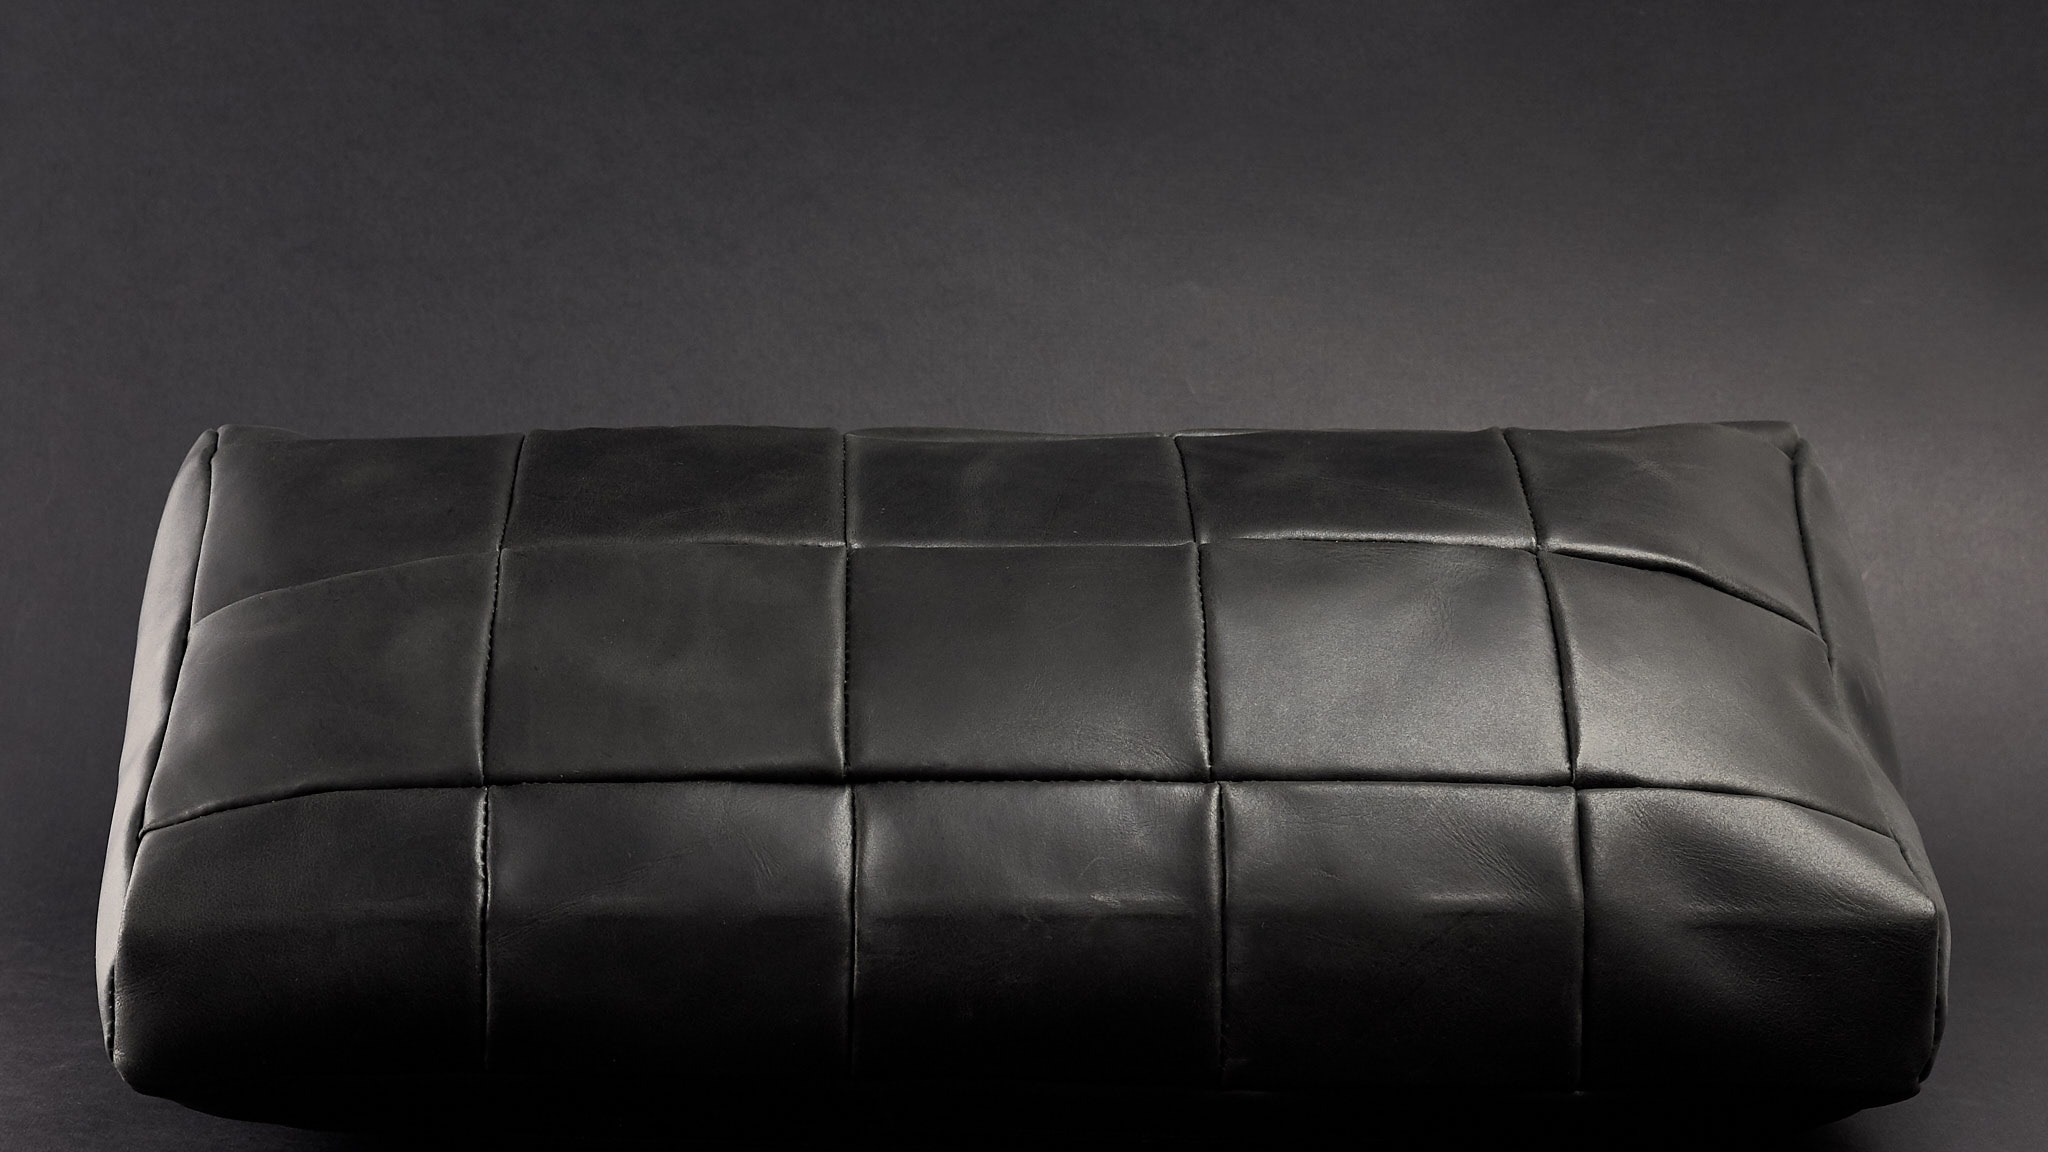 Capra Leather Desk Footrest Cover